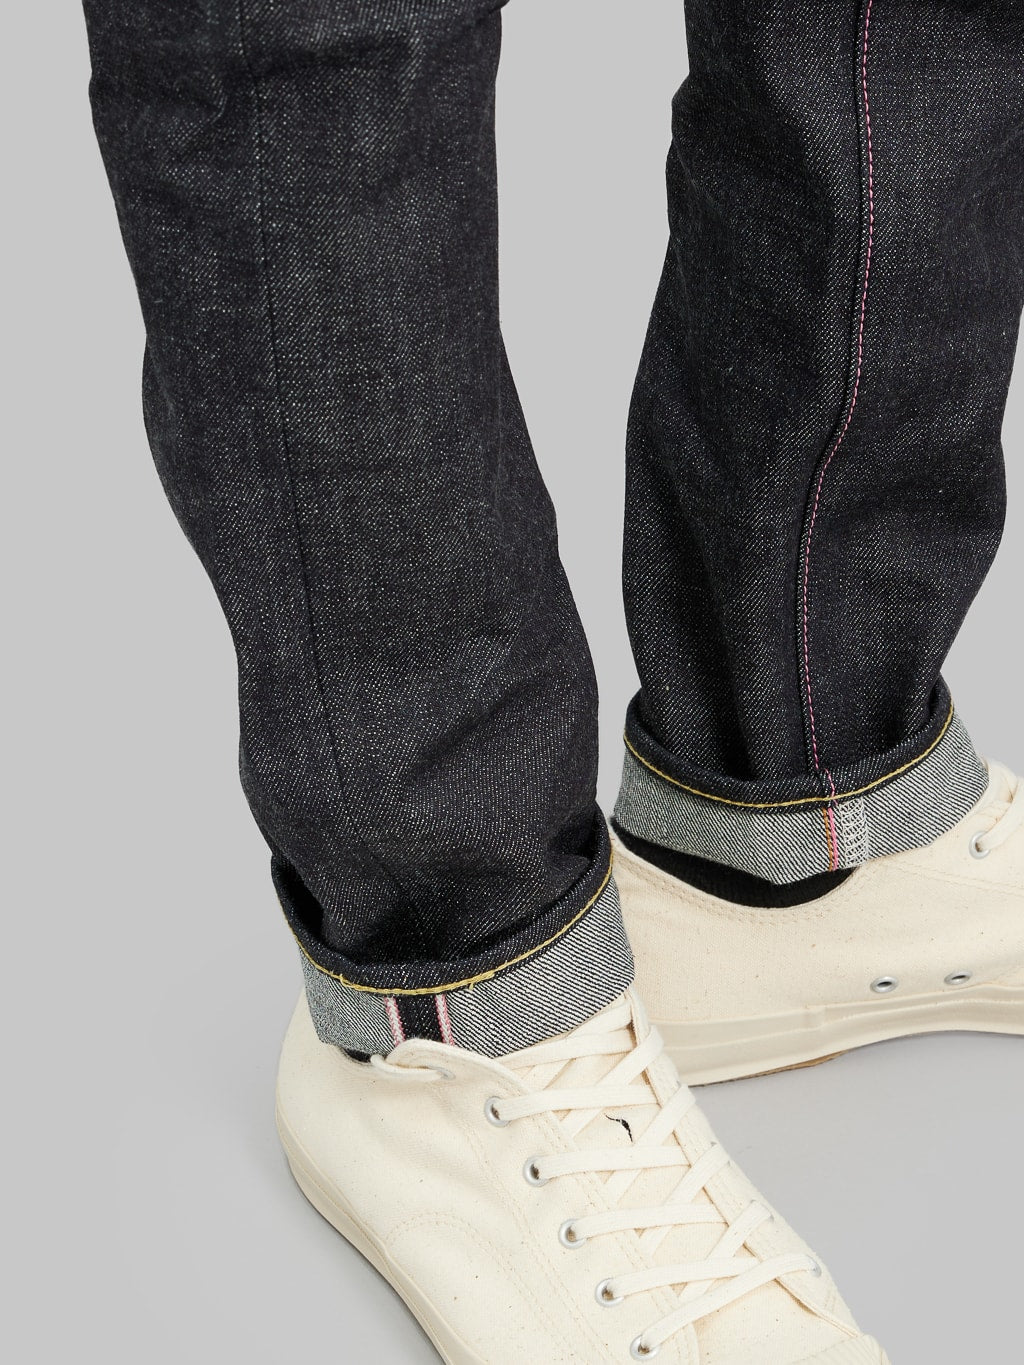 momotaro jeans 0405 v selvedge denim high tapered selvedge closeup